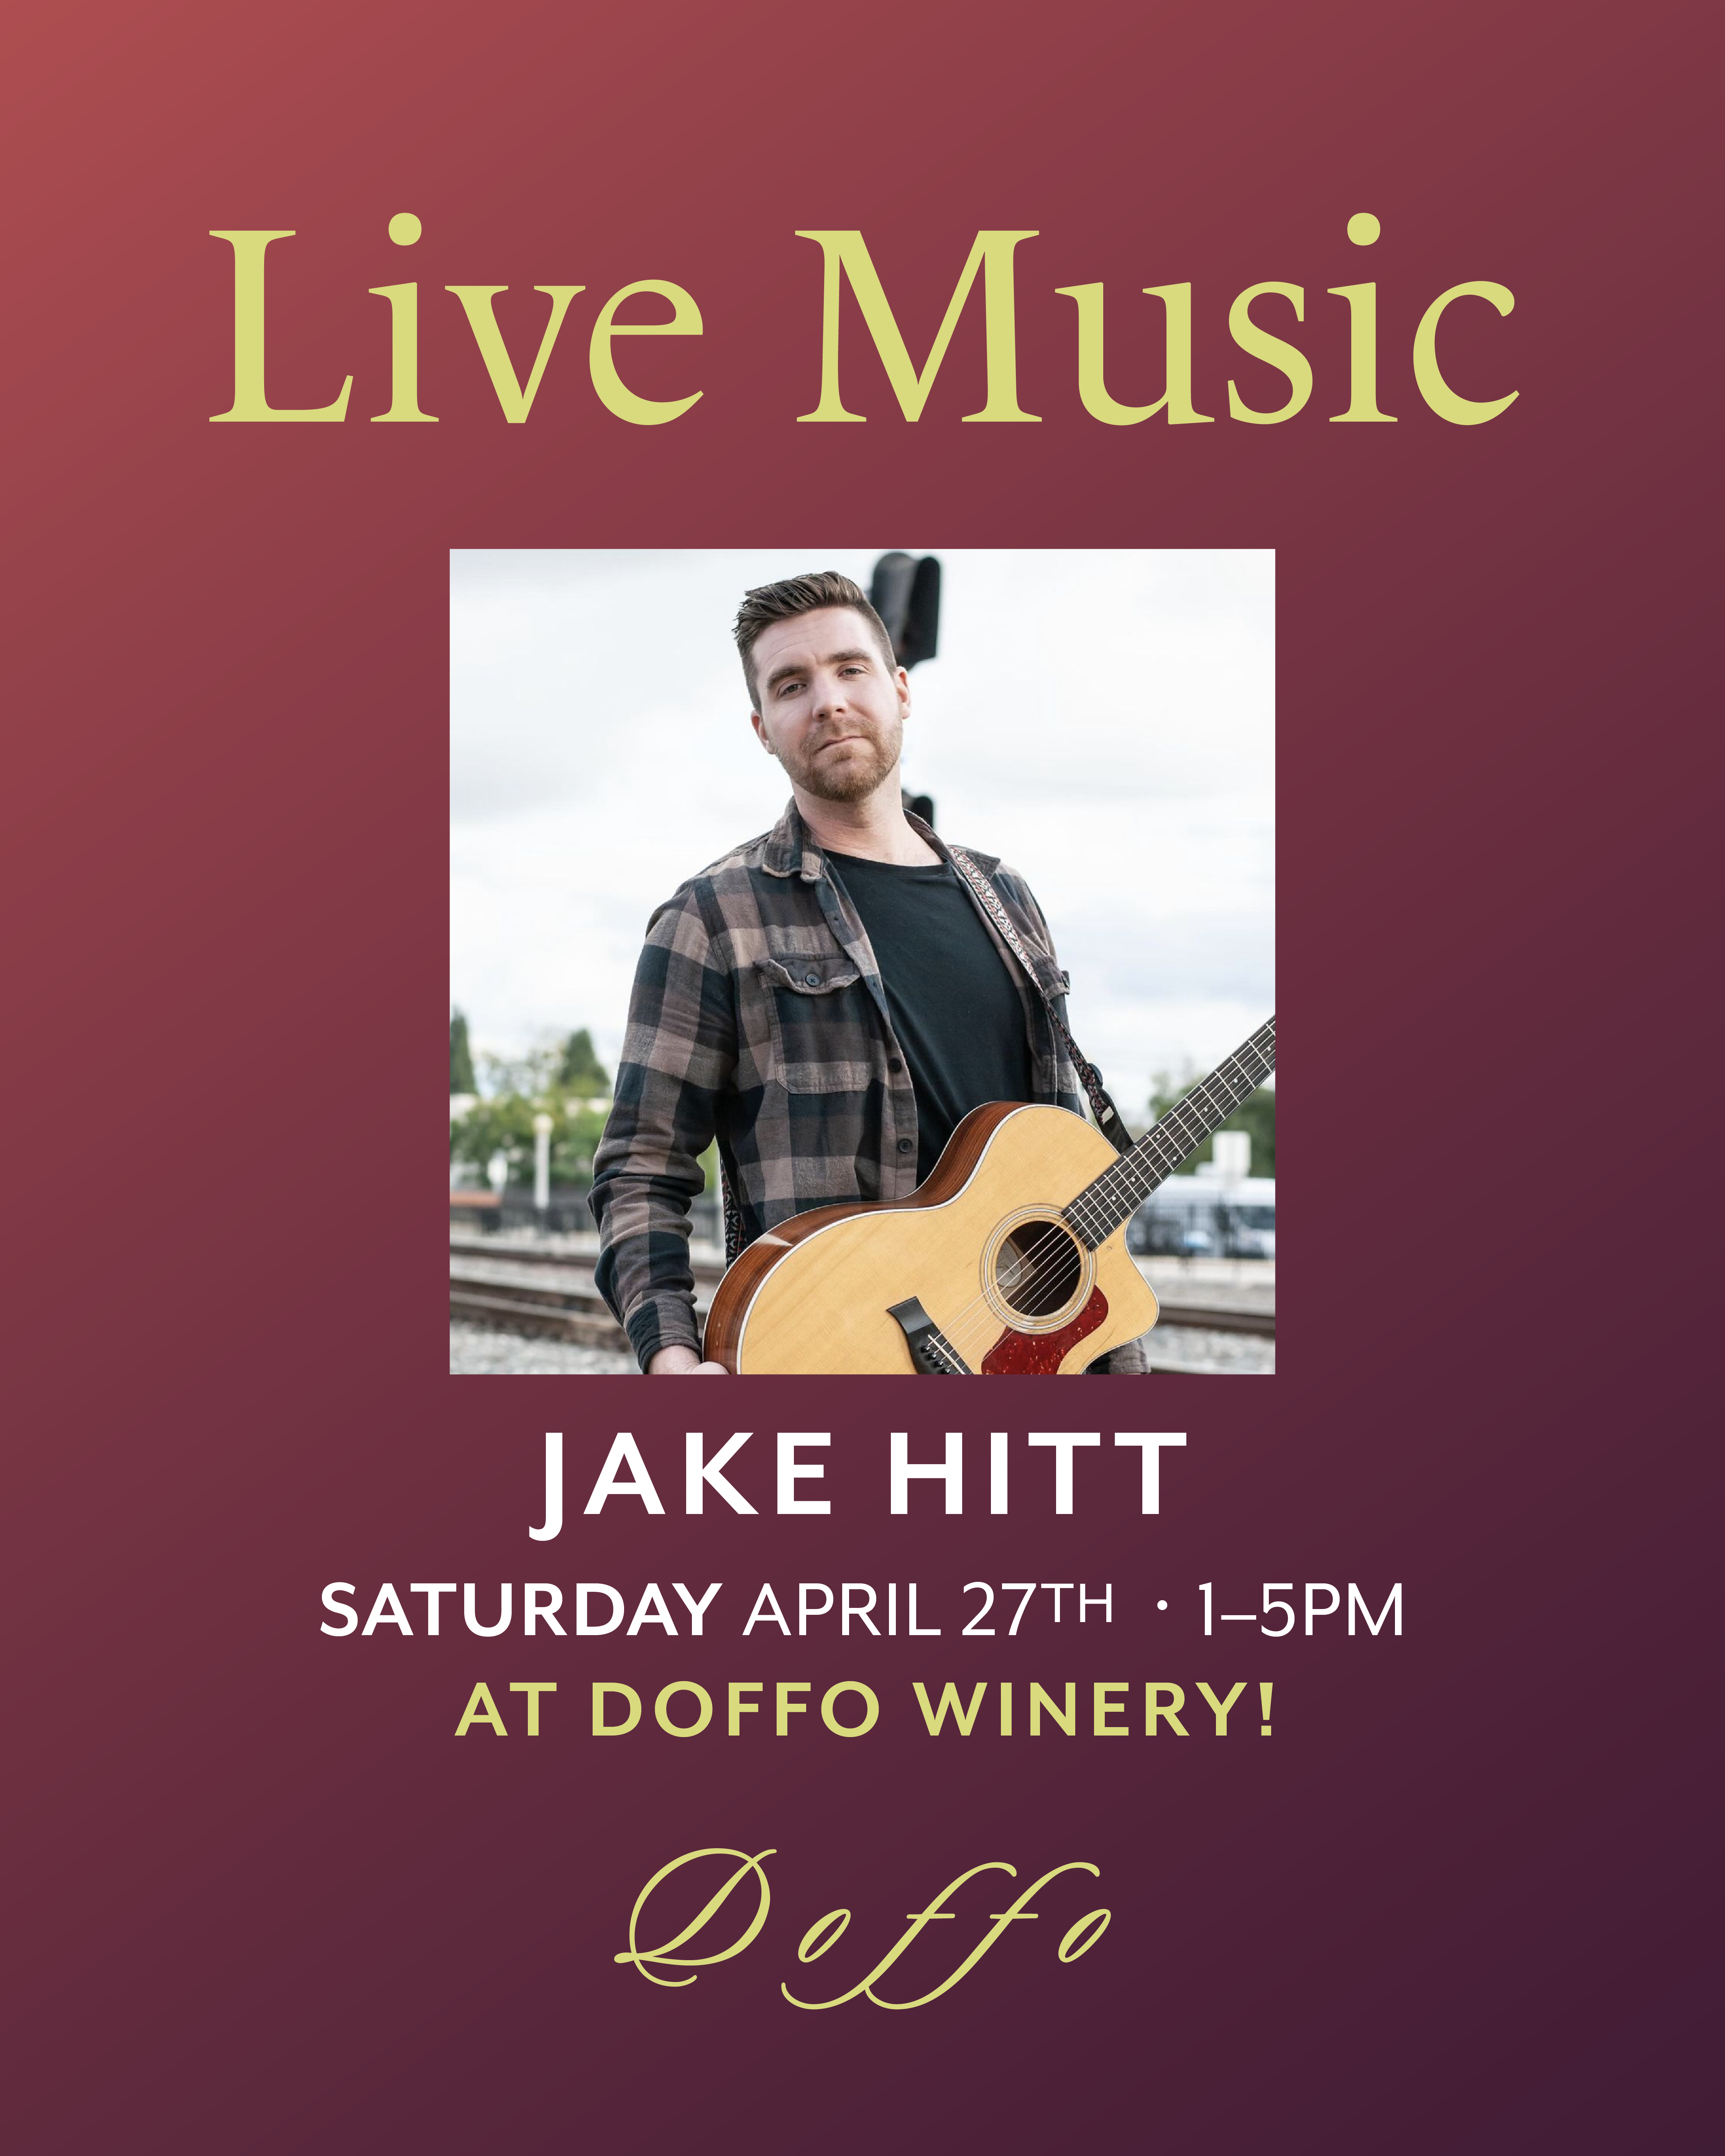 Live Music at the Doffo Winery | Jake Hitt